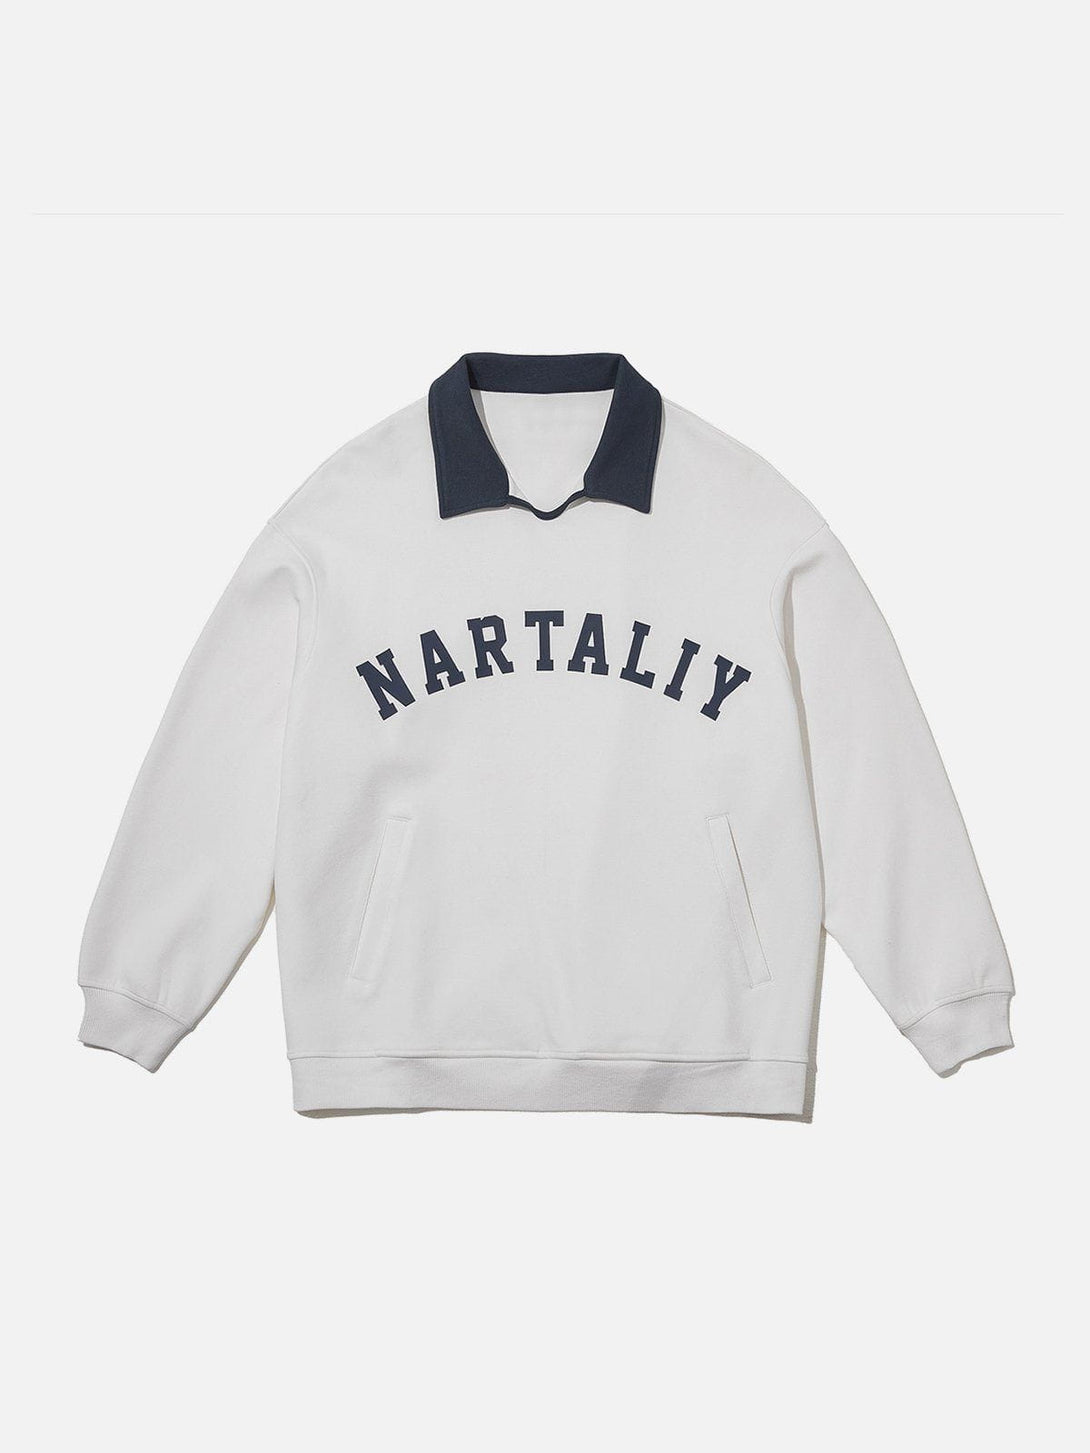 Levefly - Nartaliy Embroidery Polo Sweatshirt - Streetwear Fashion - levefly.com